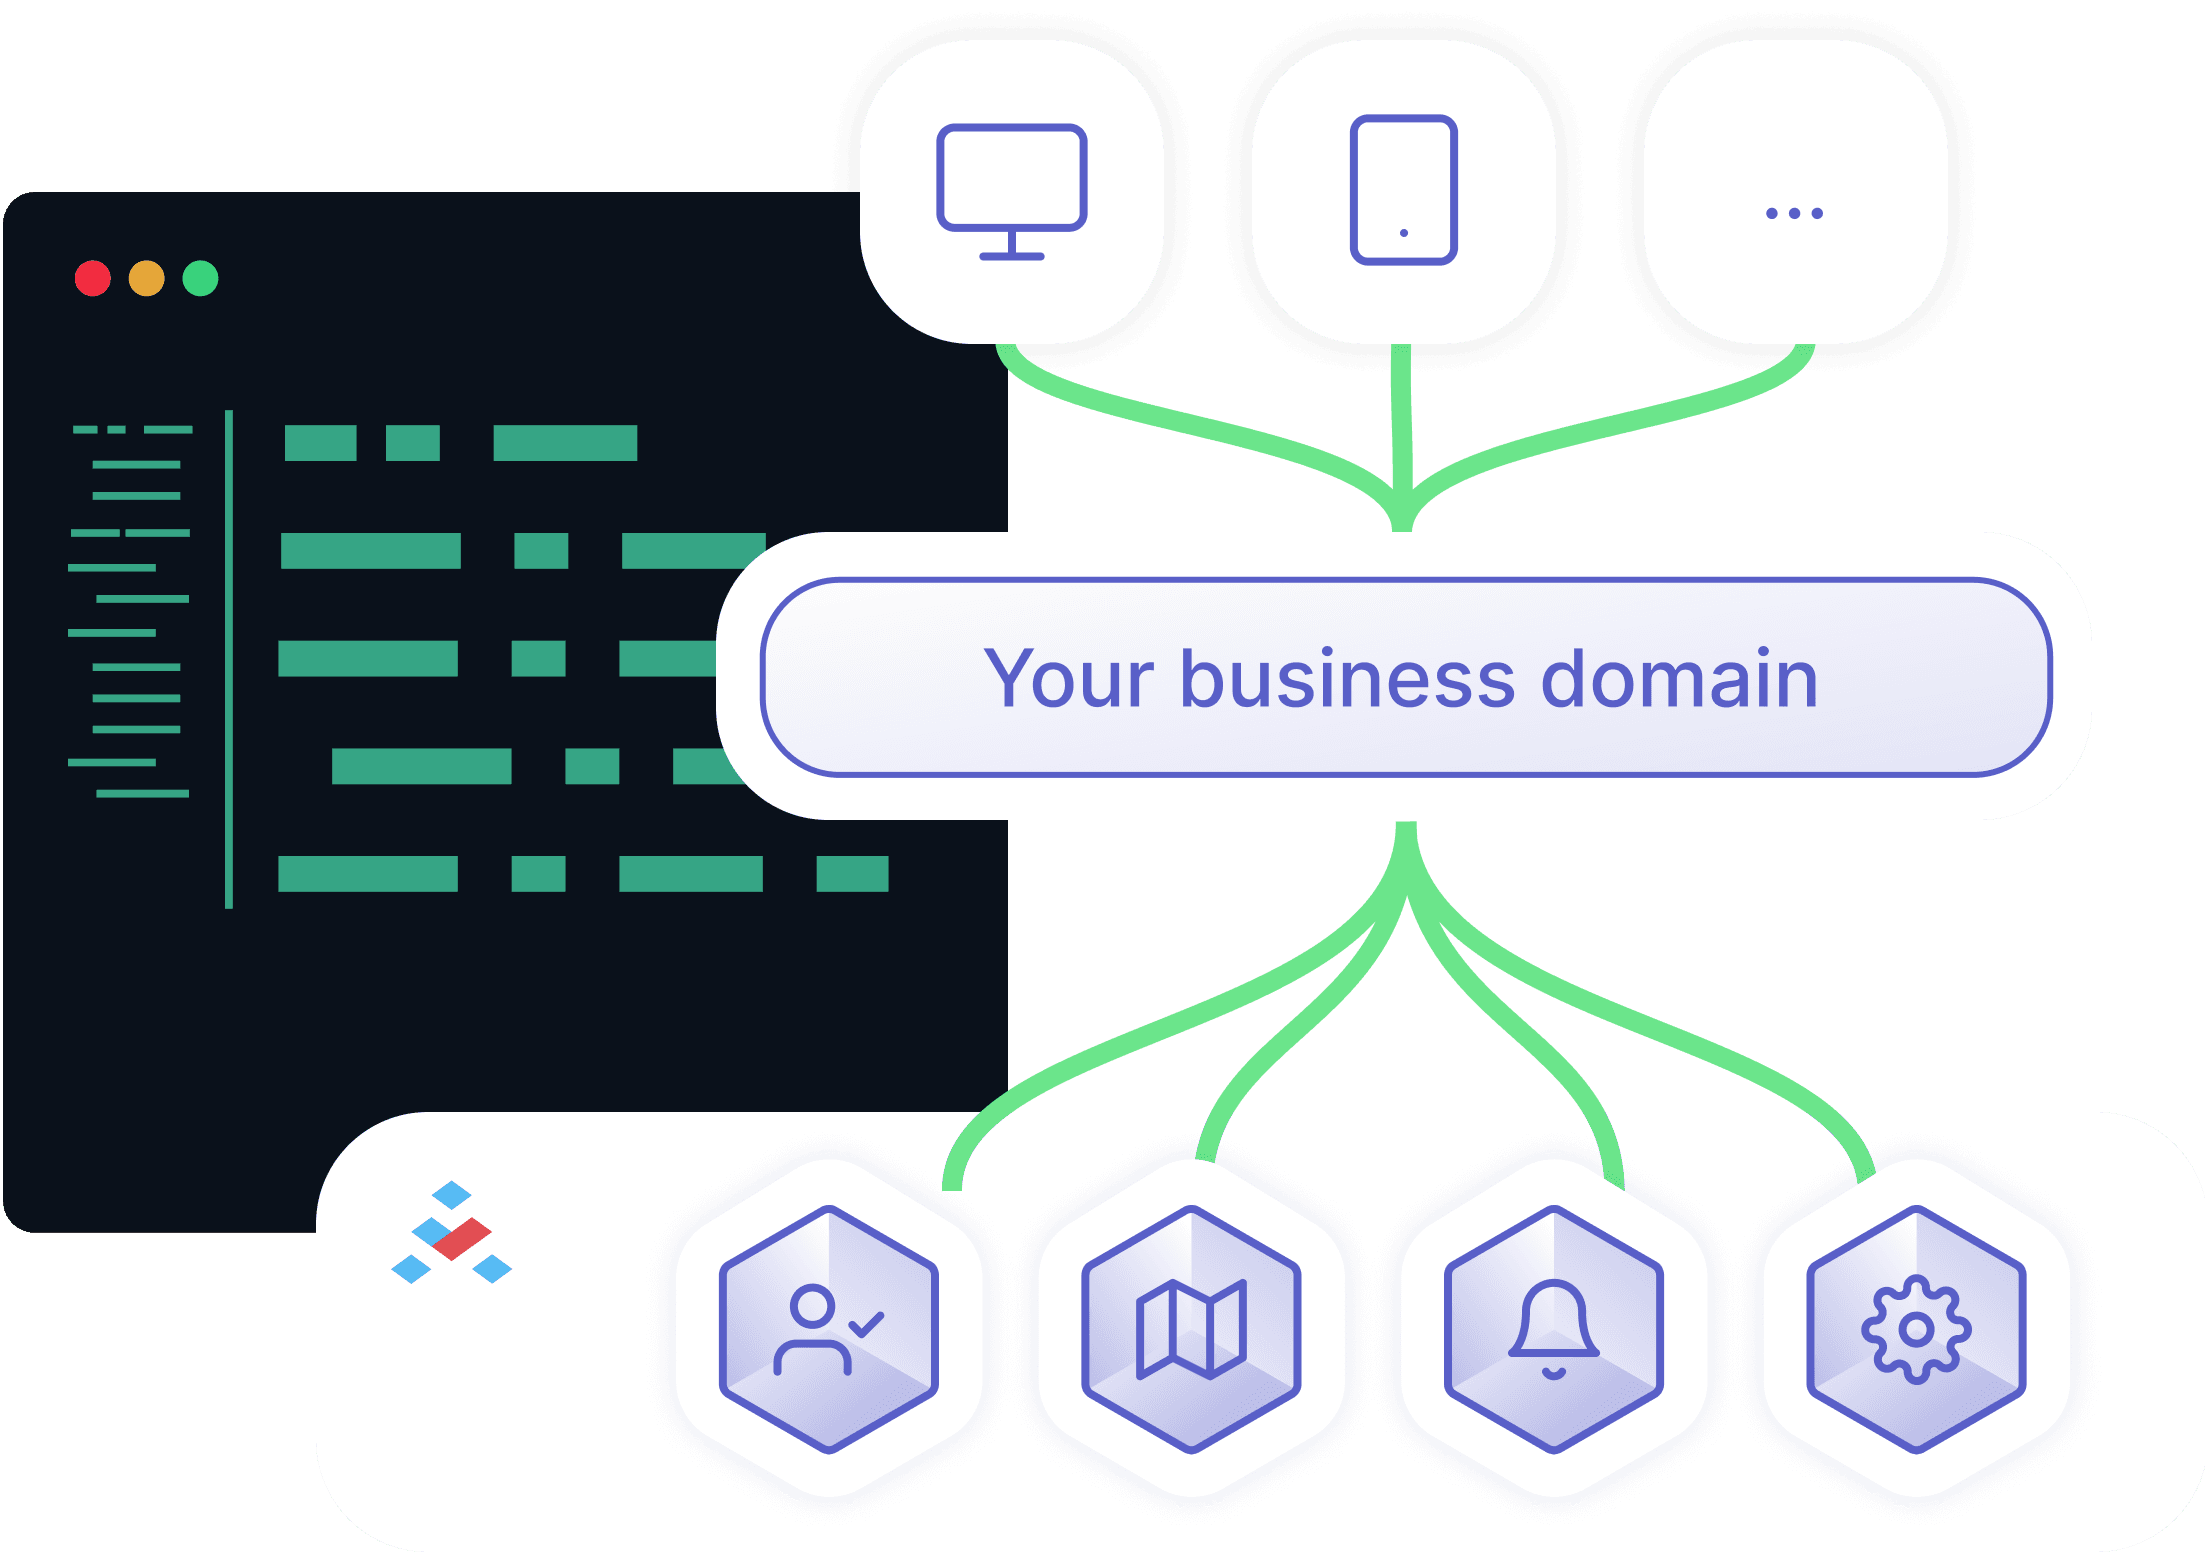 LogicBlocks business domain